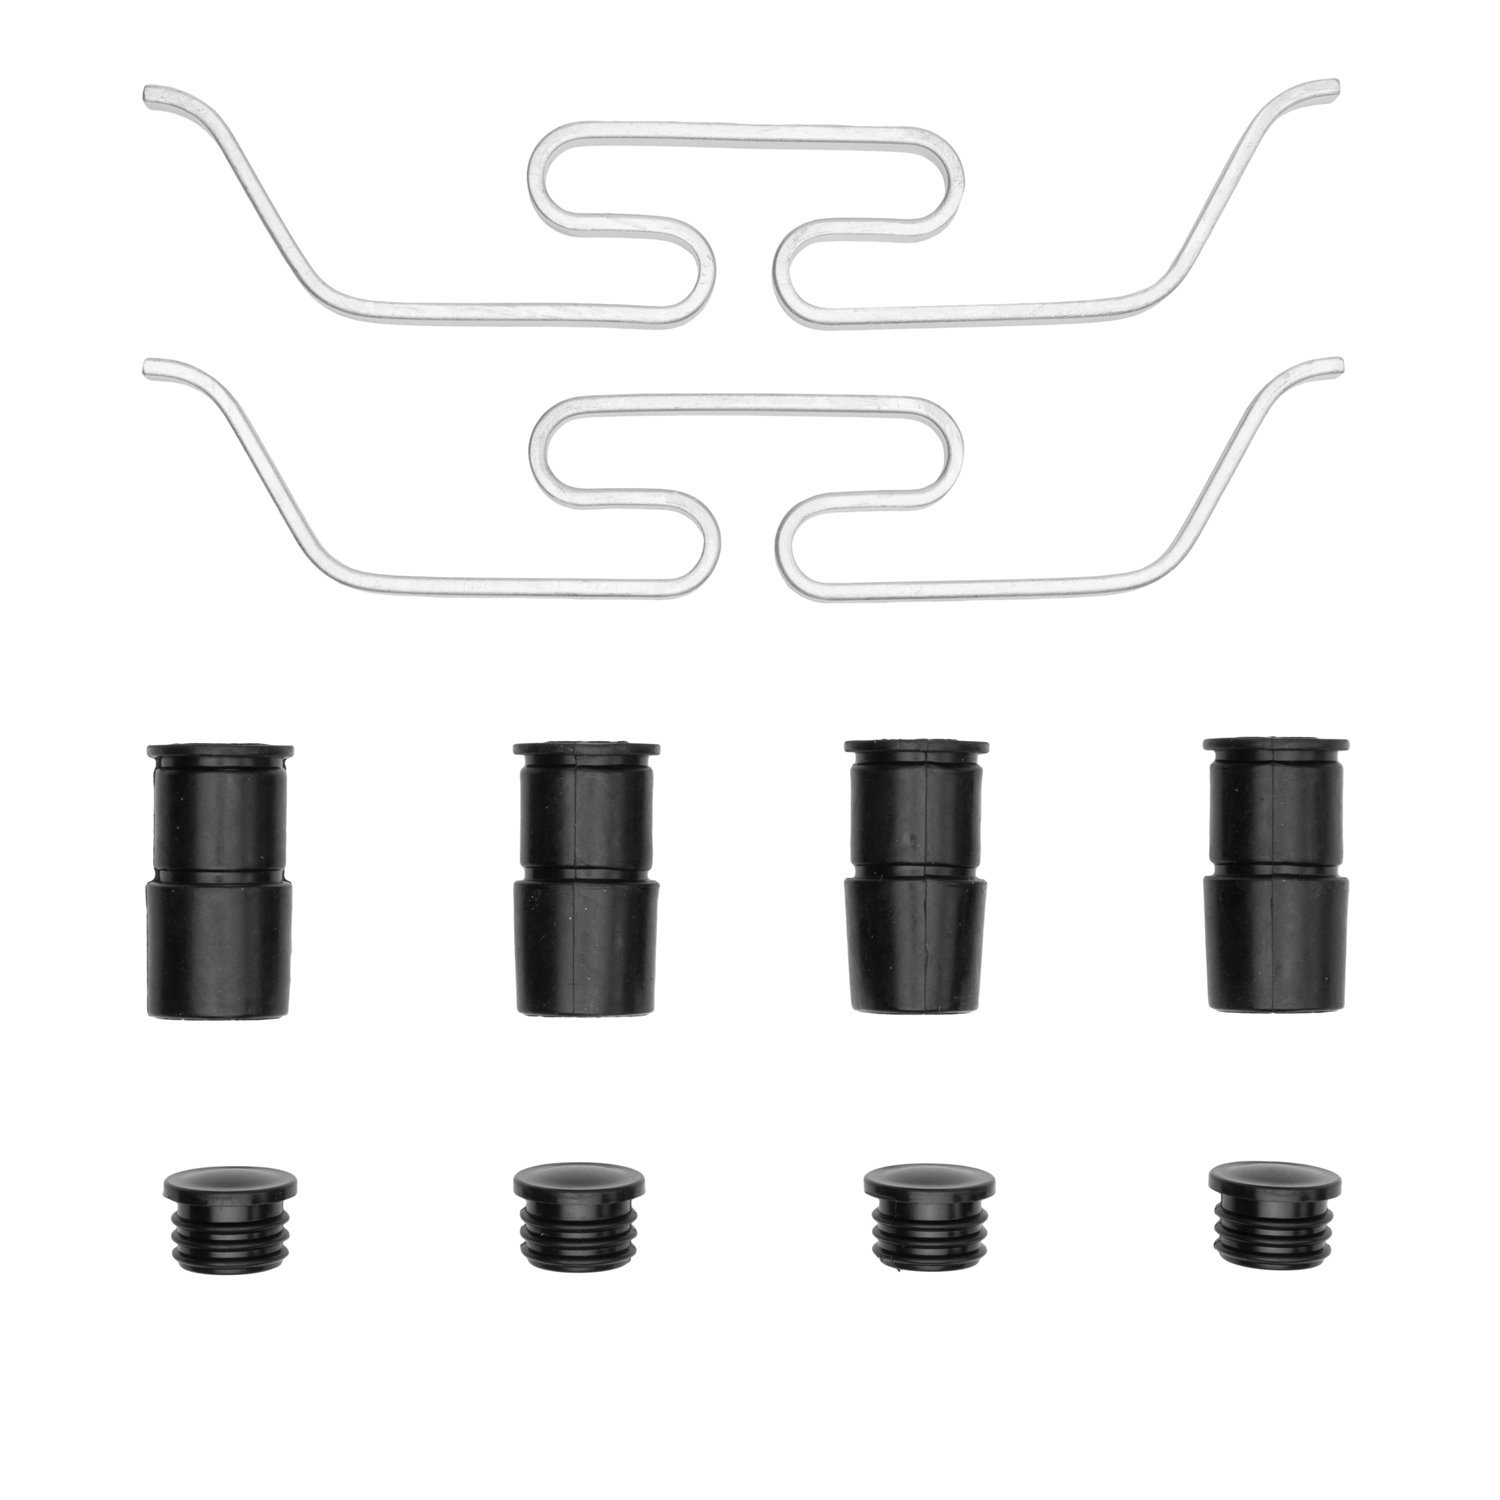 Disc Brake Hardware Kit, Fits Select Fits Multiple Makes/Models, Position: Front & Rear